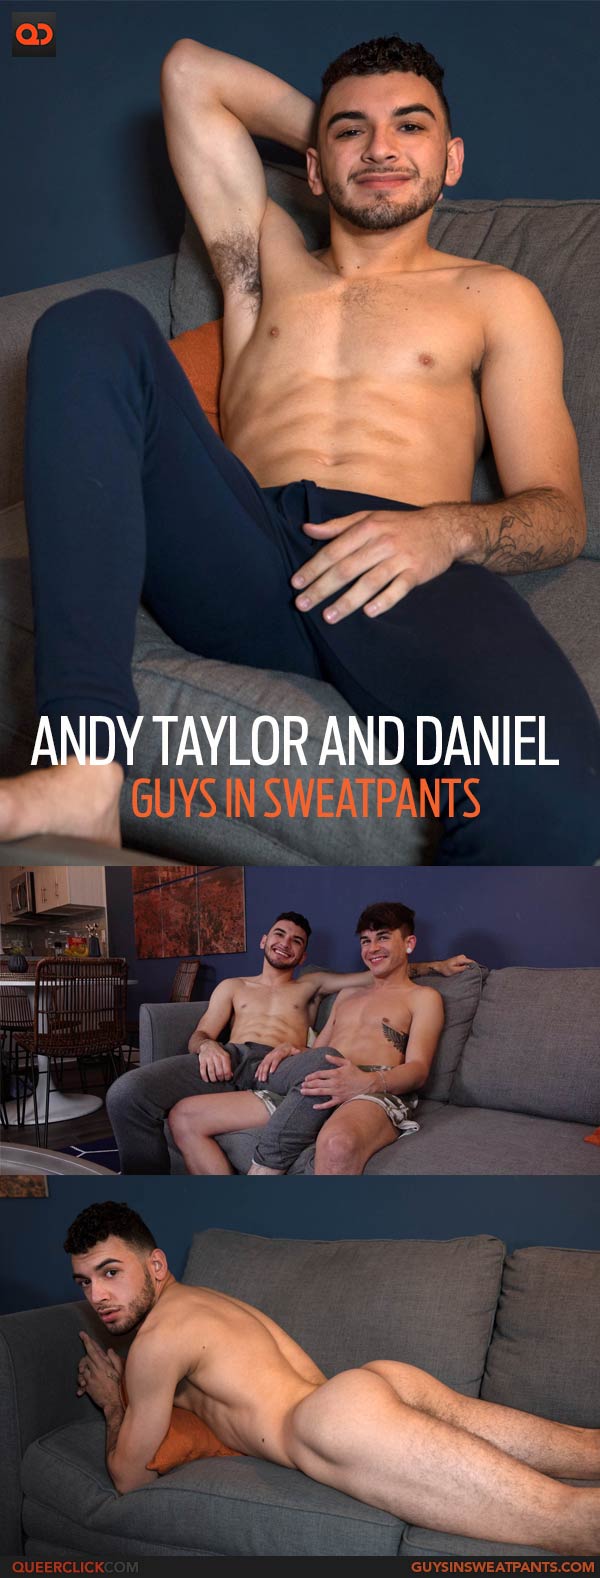 GuysInSweatpants: Andy Taylor and Daniel